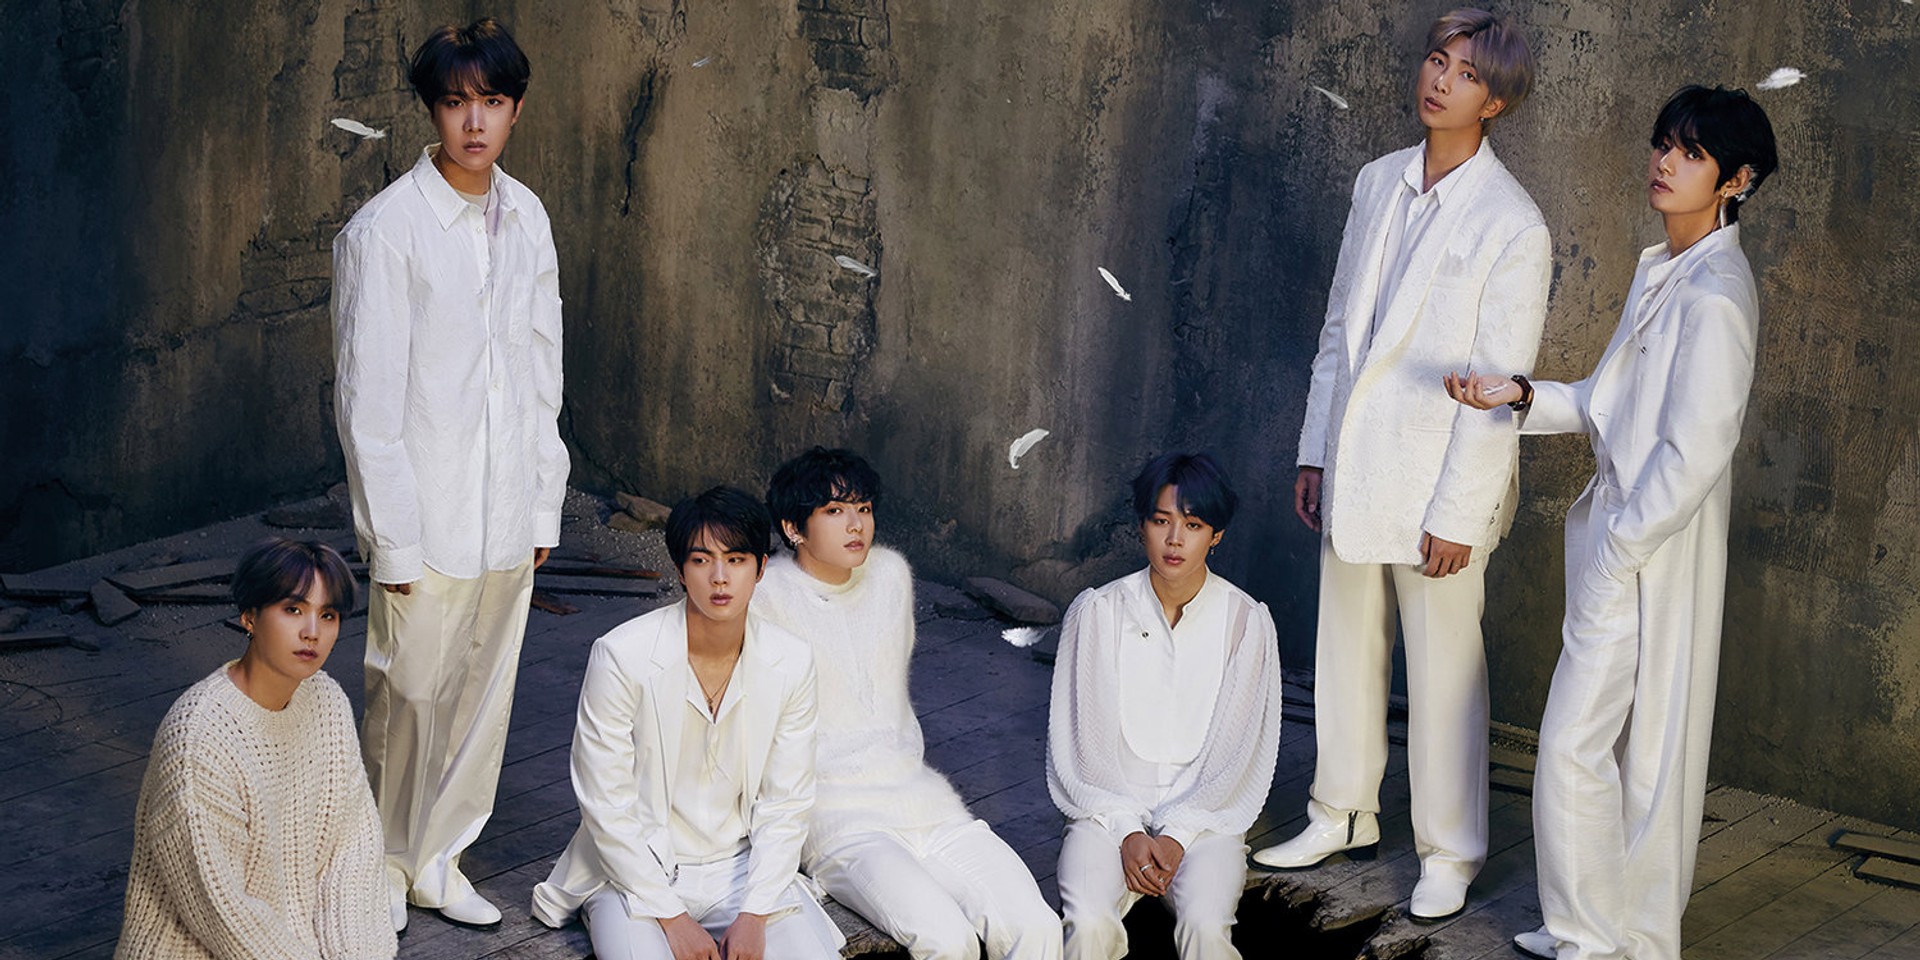 BTS previews new album title track, ‘ON’, on Tik Tok